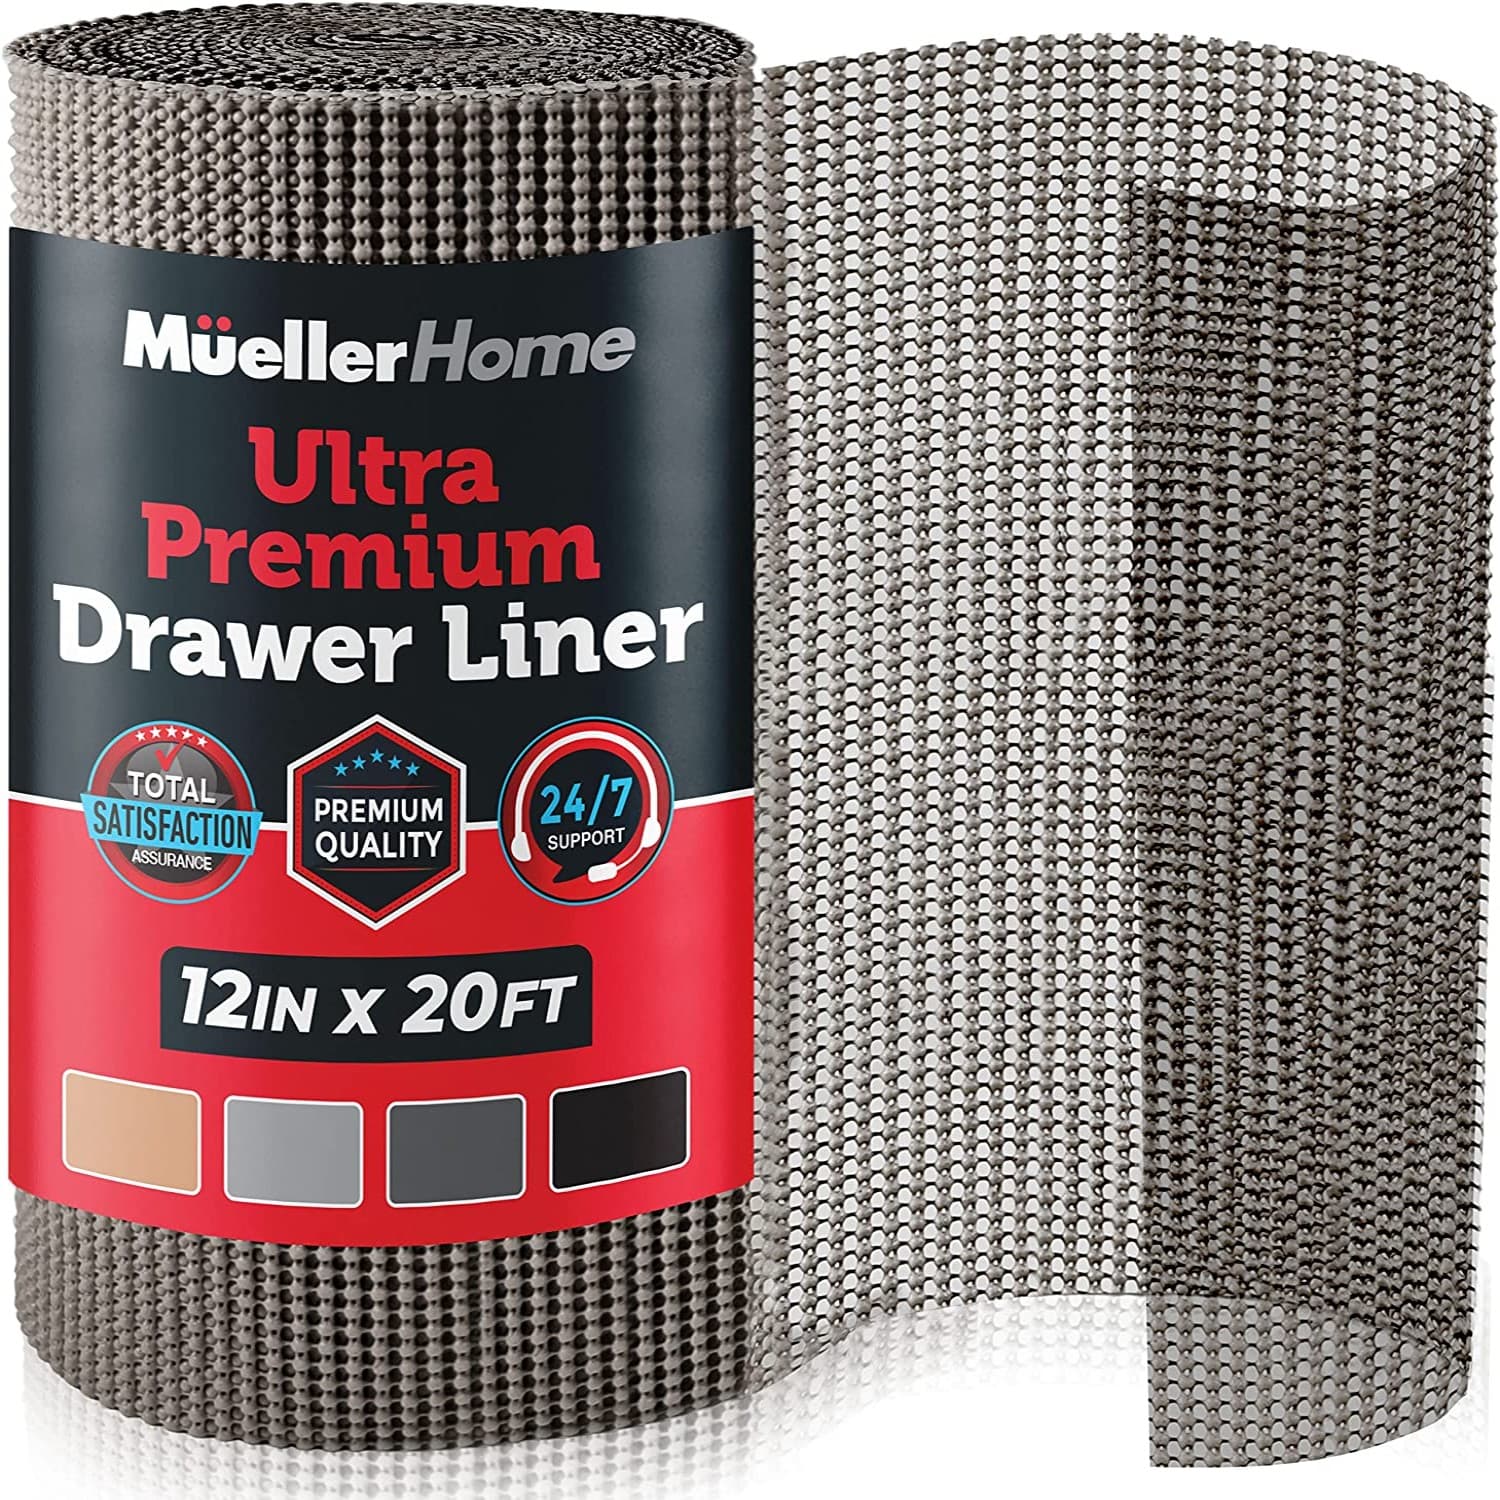 muellerhome_Ultra-Premium Drawer Liner 12in20ft – Gray